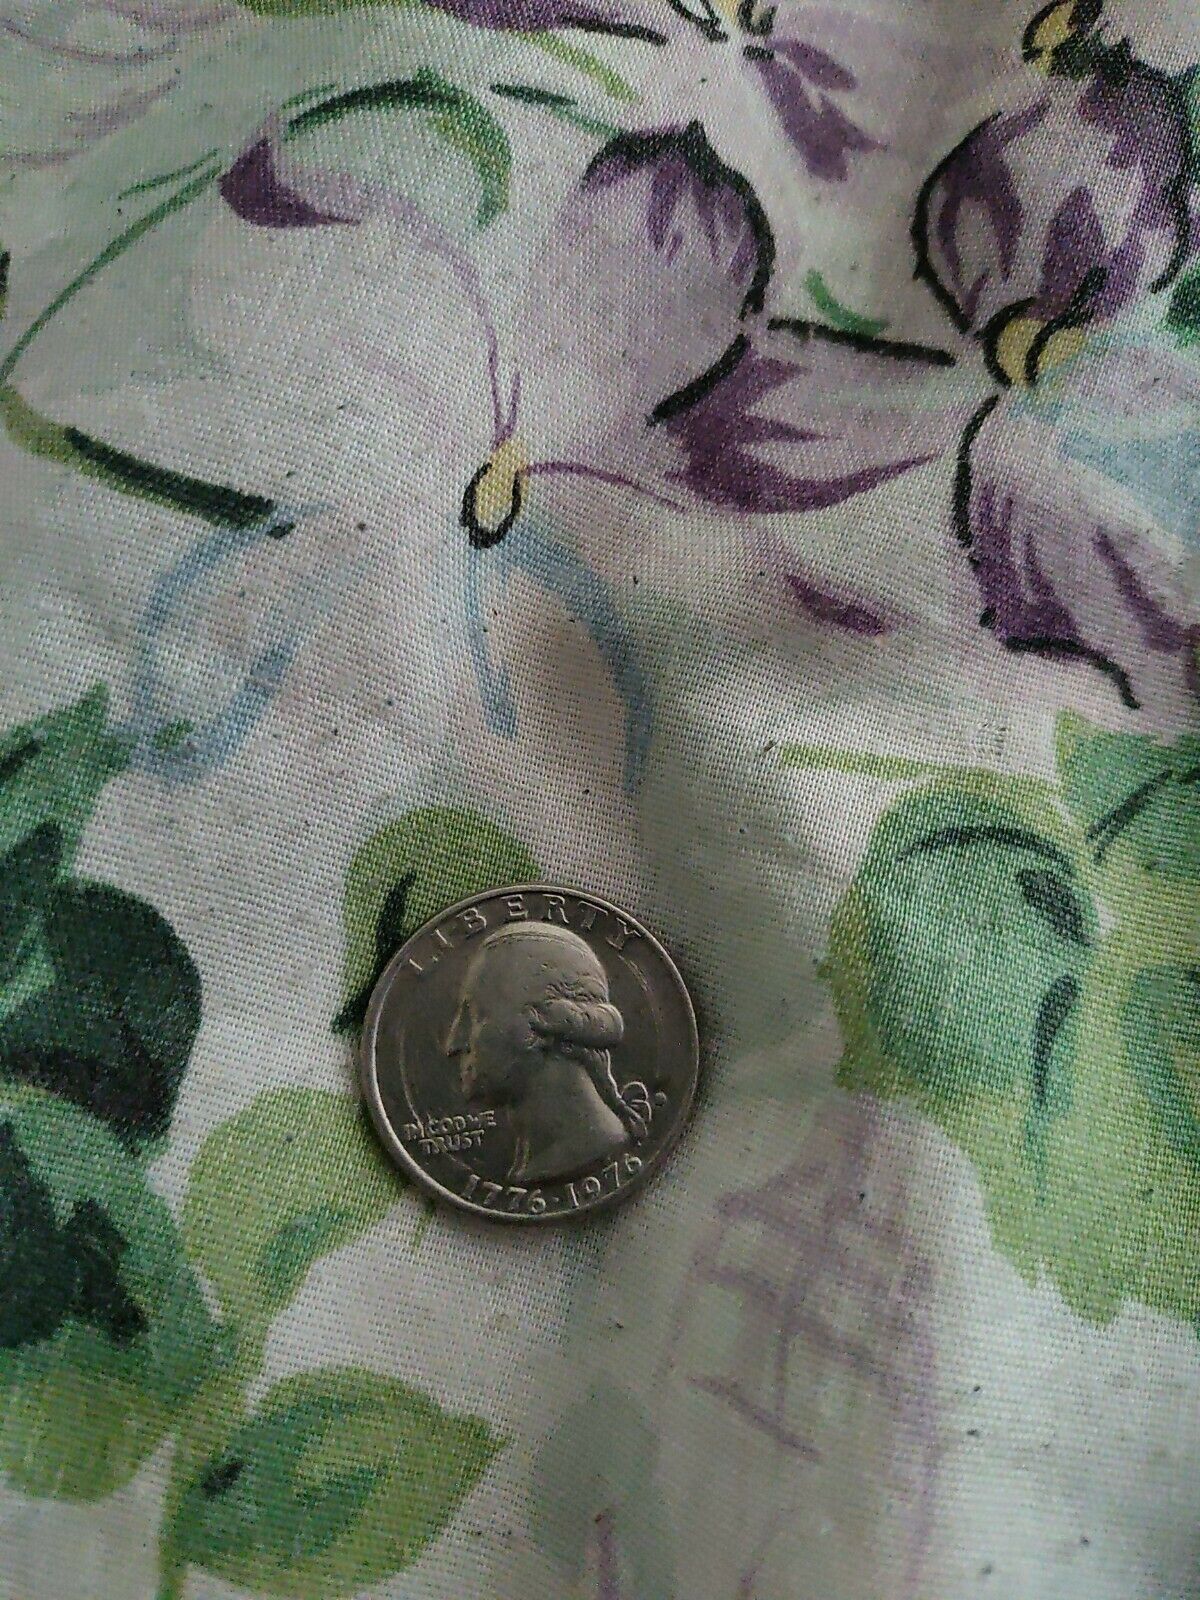 Mint 1776-1976 Quarter